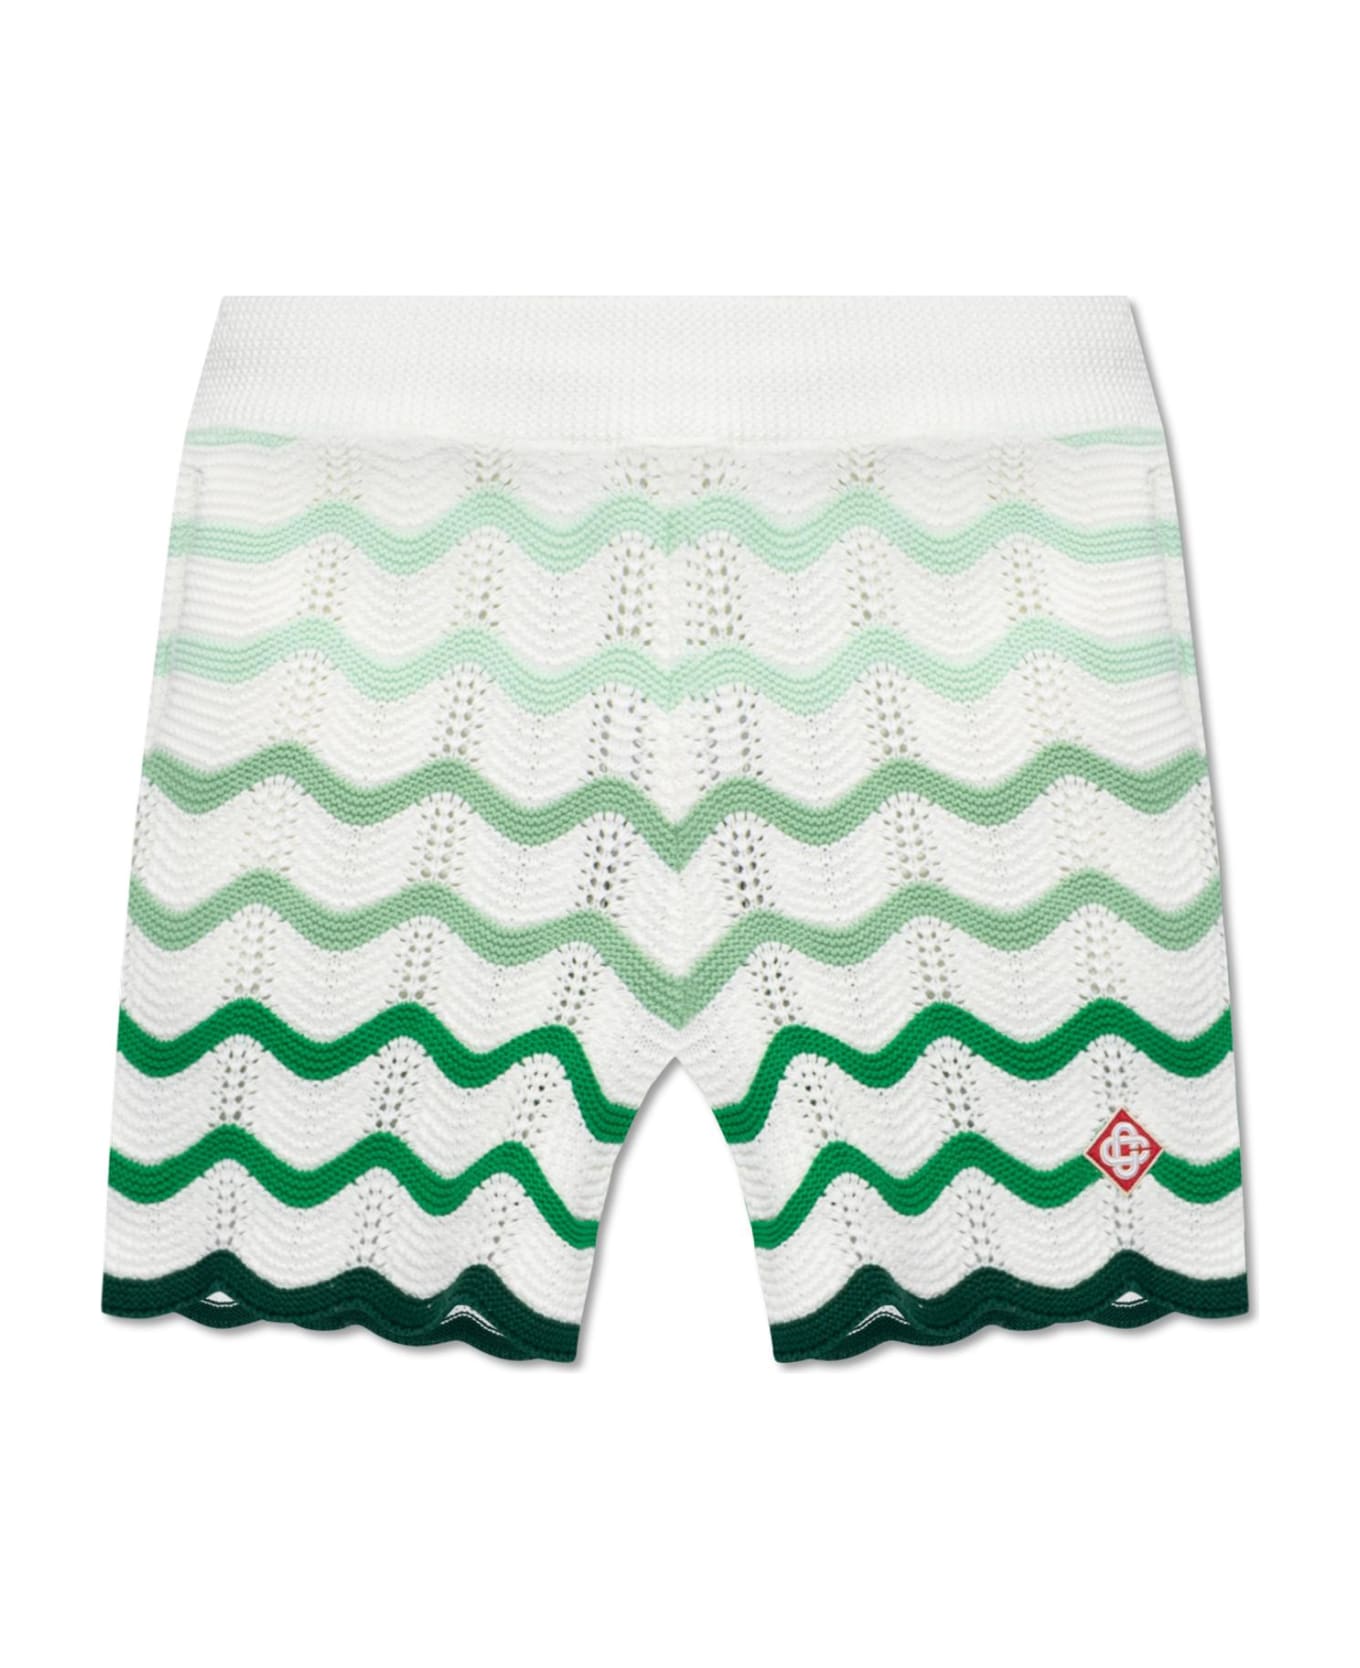 Casablanca Crochet Shorts - Green/white